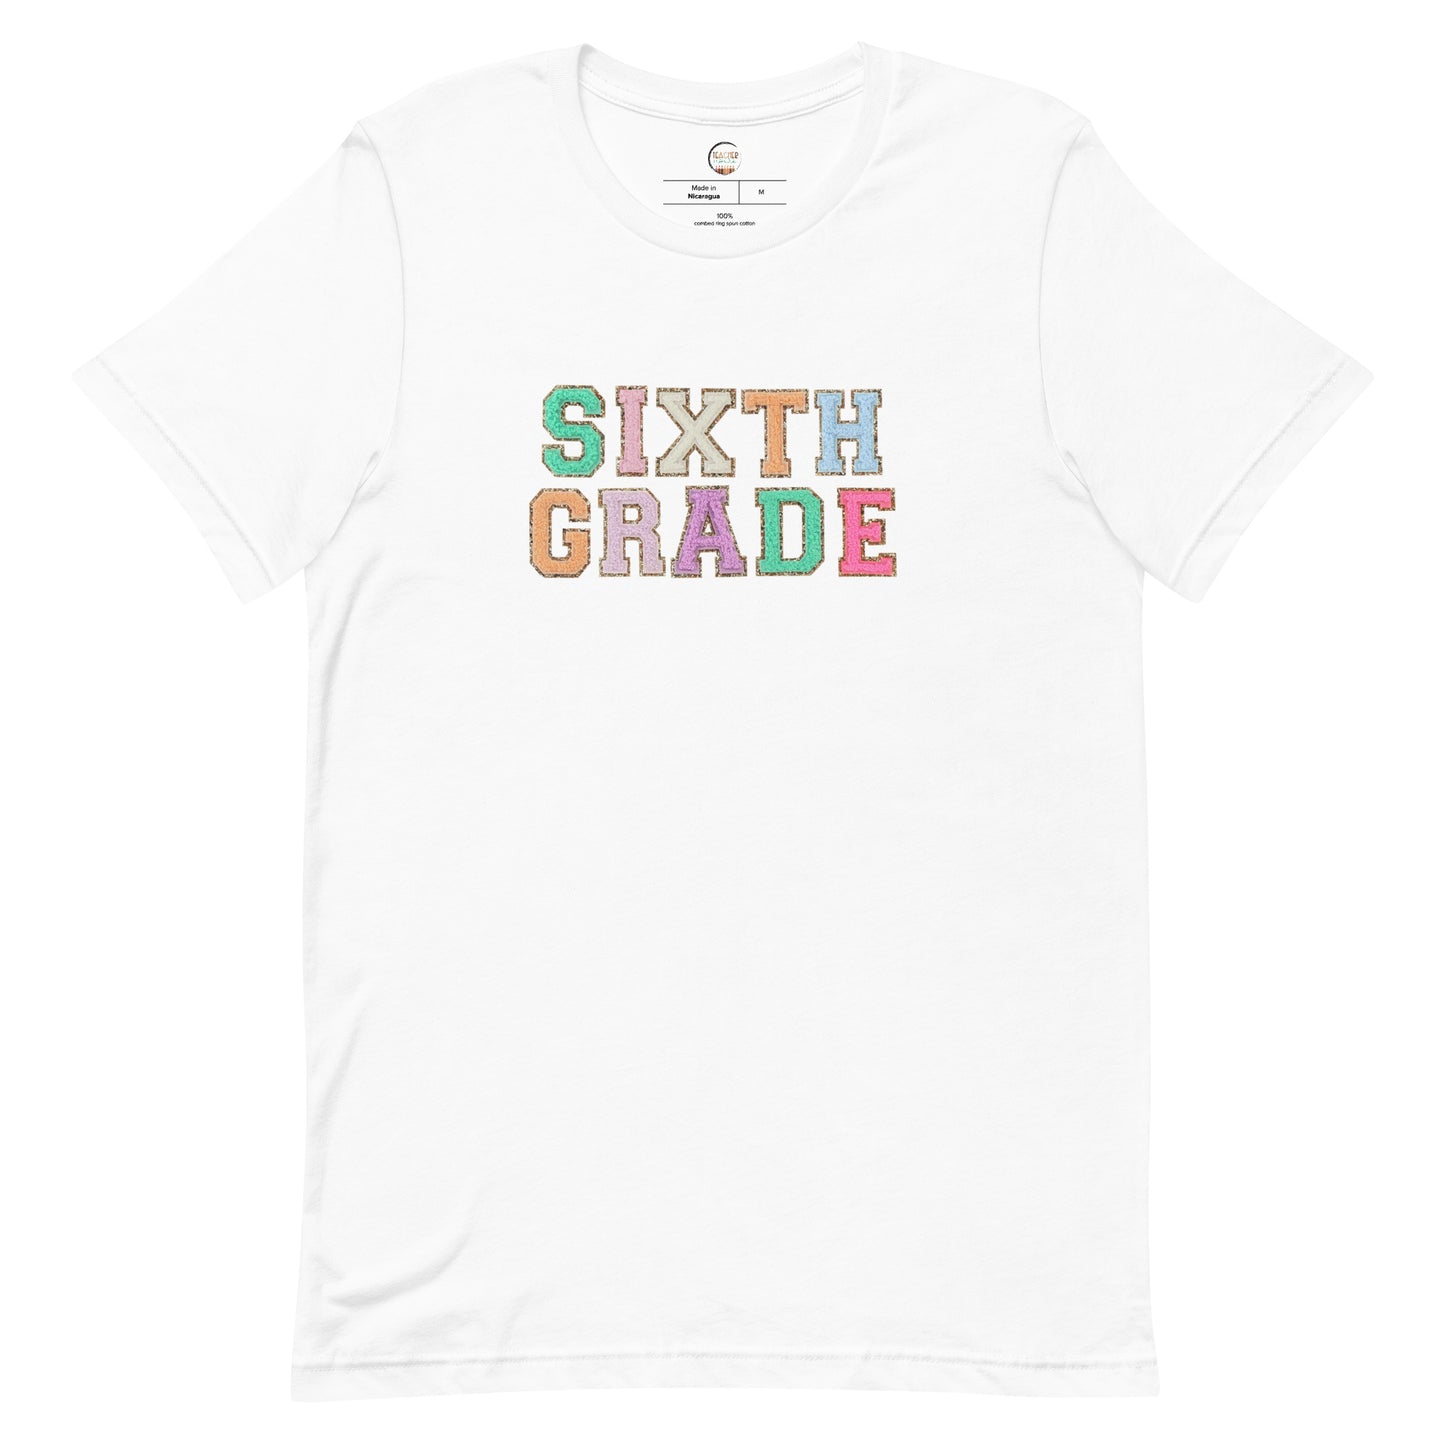 Sixth Grade Teacher Shirt (faux letter patches)